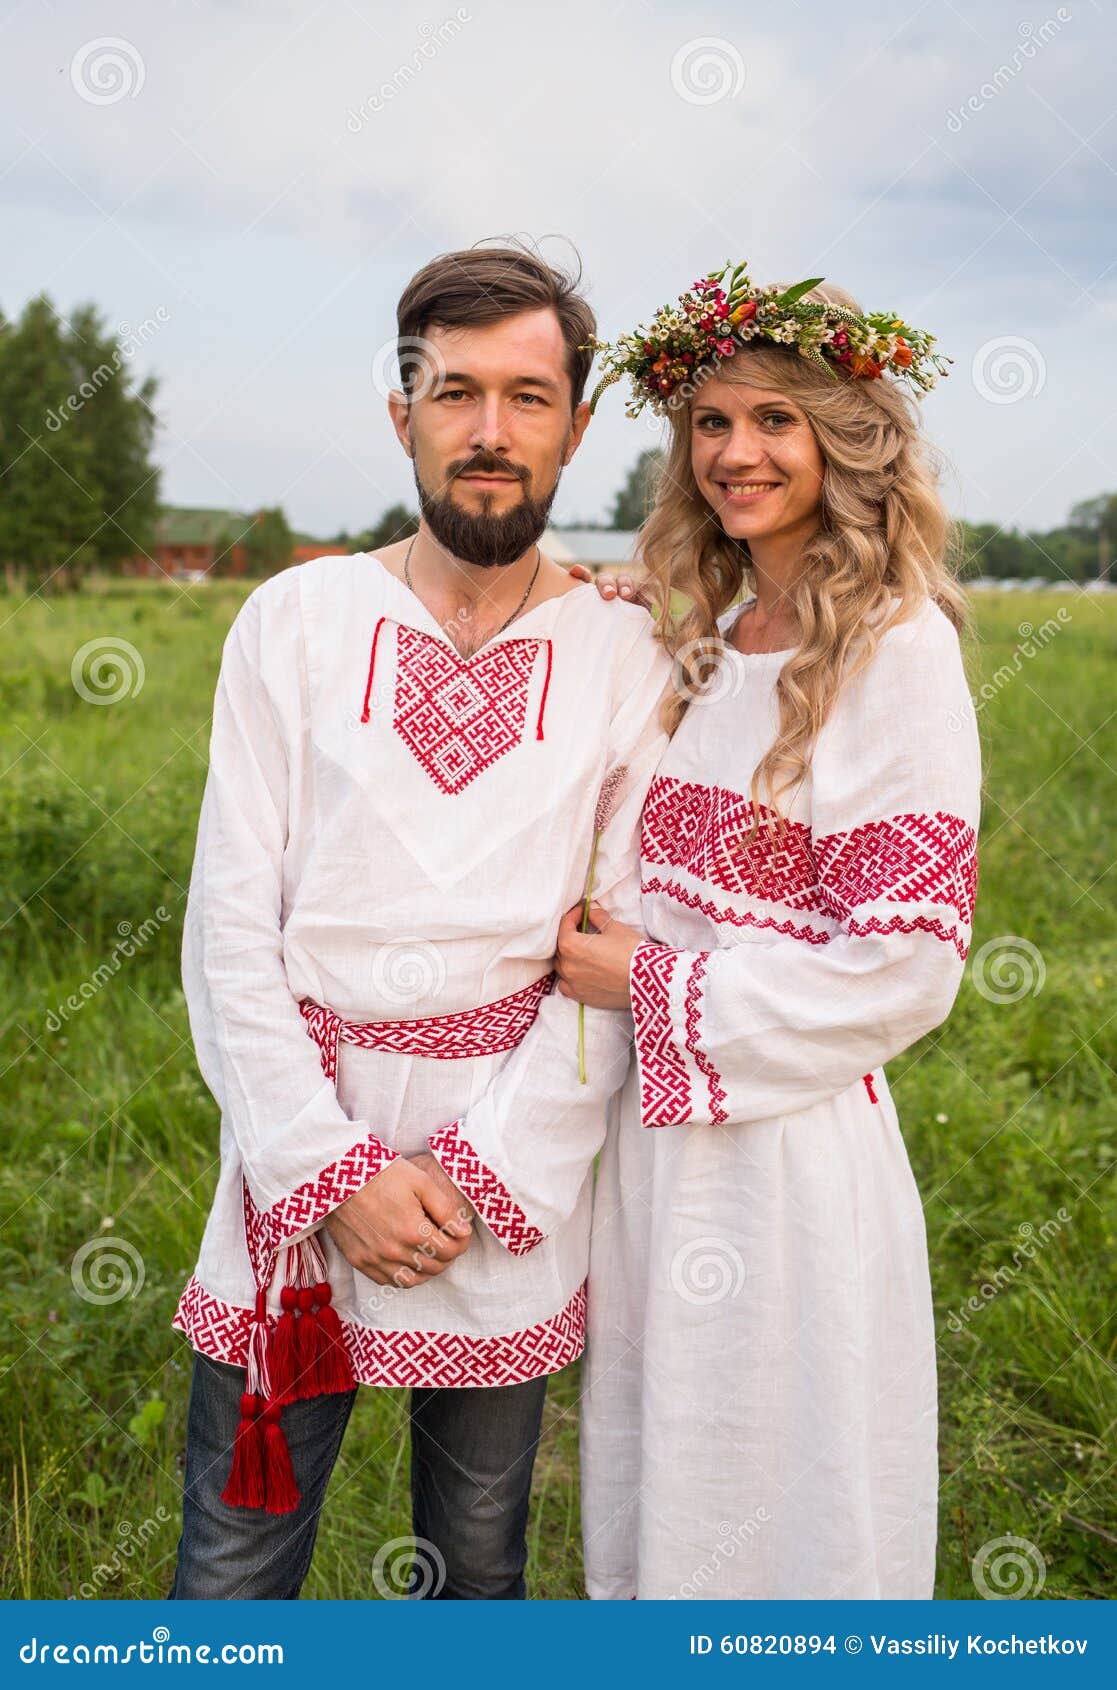 Russian People Traditional Dress - Russian Culture Wikipedia - It is ...